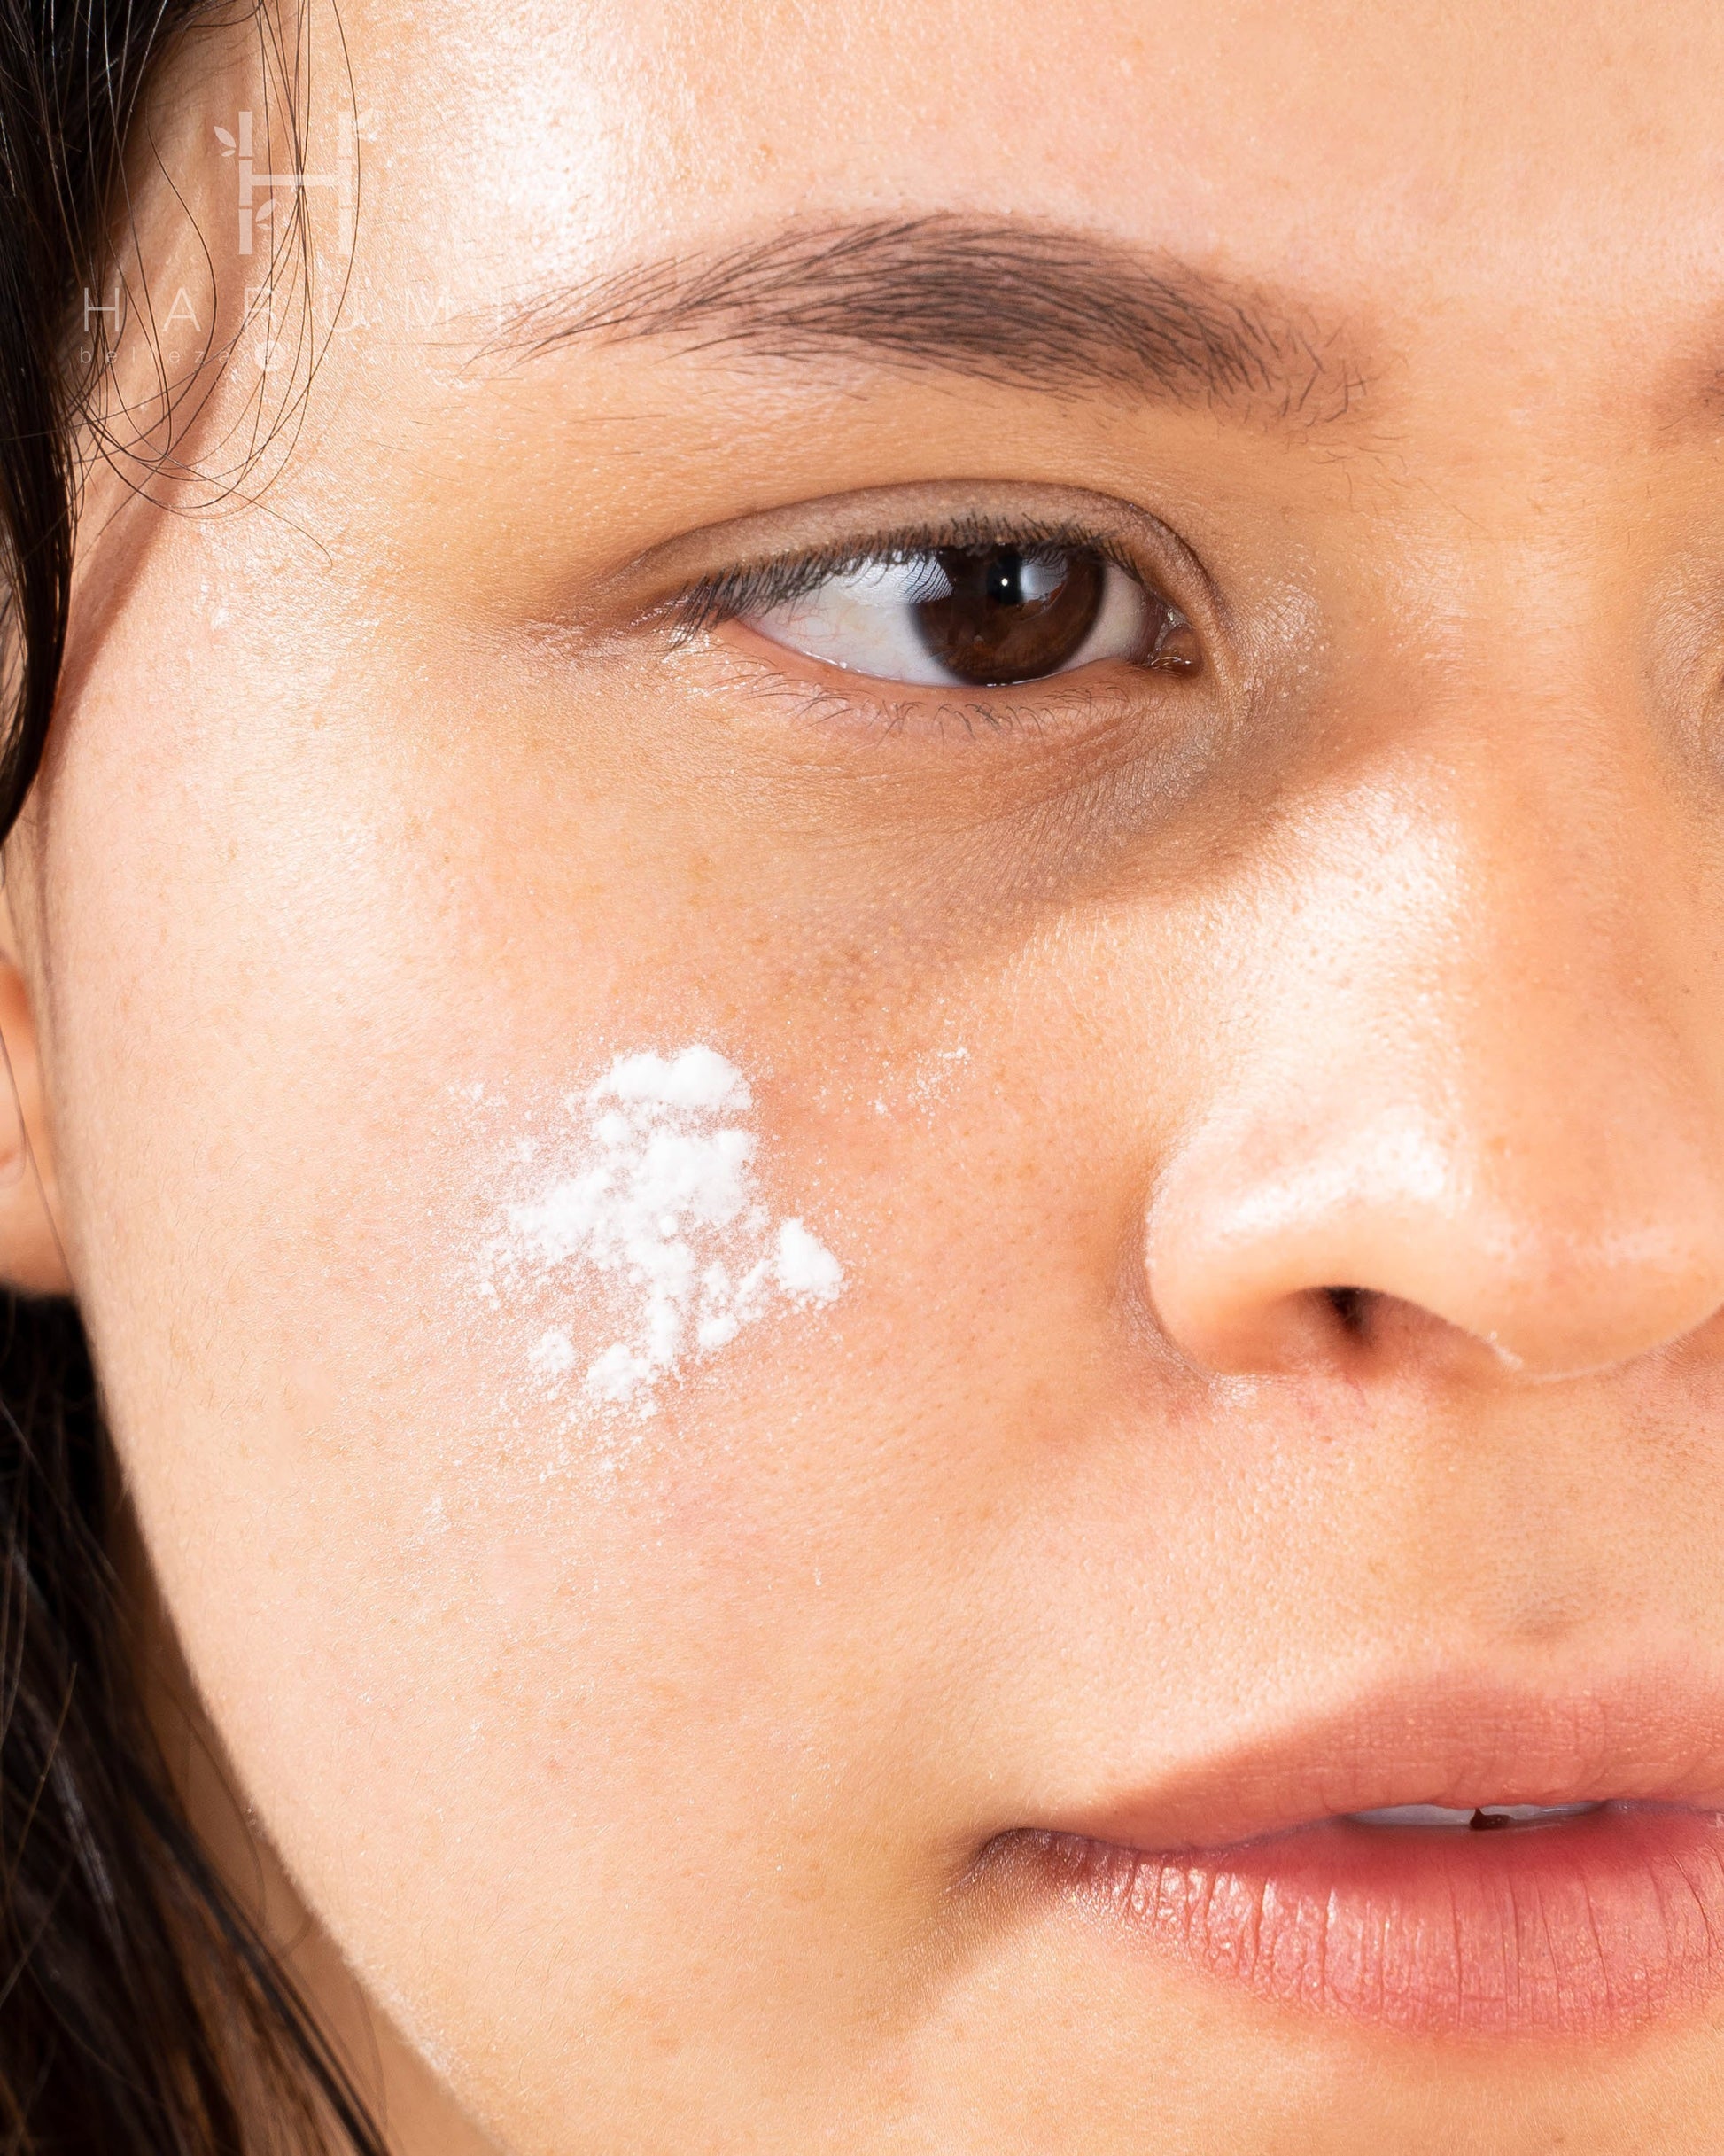 Tiam Vitamin Blending Powder Skincare maquillaje productos de belleza coreanos en Colombia kbeauty